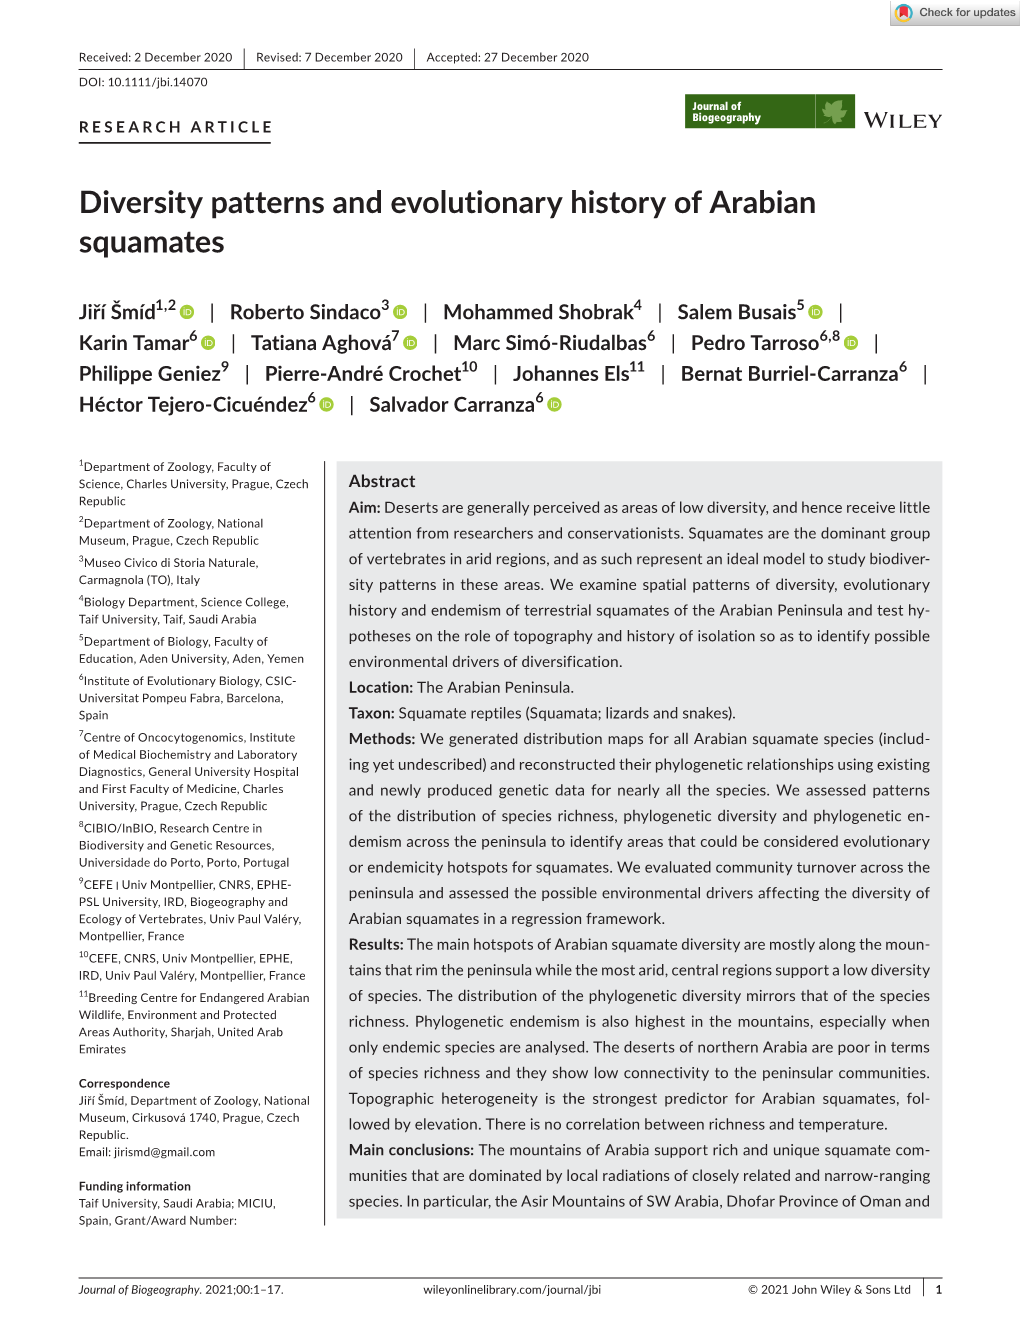 Diversity Patterns and Evolutionary History of Arabian Squamates